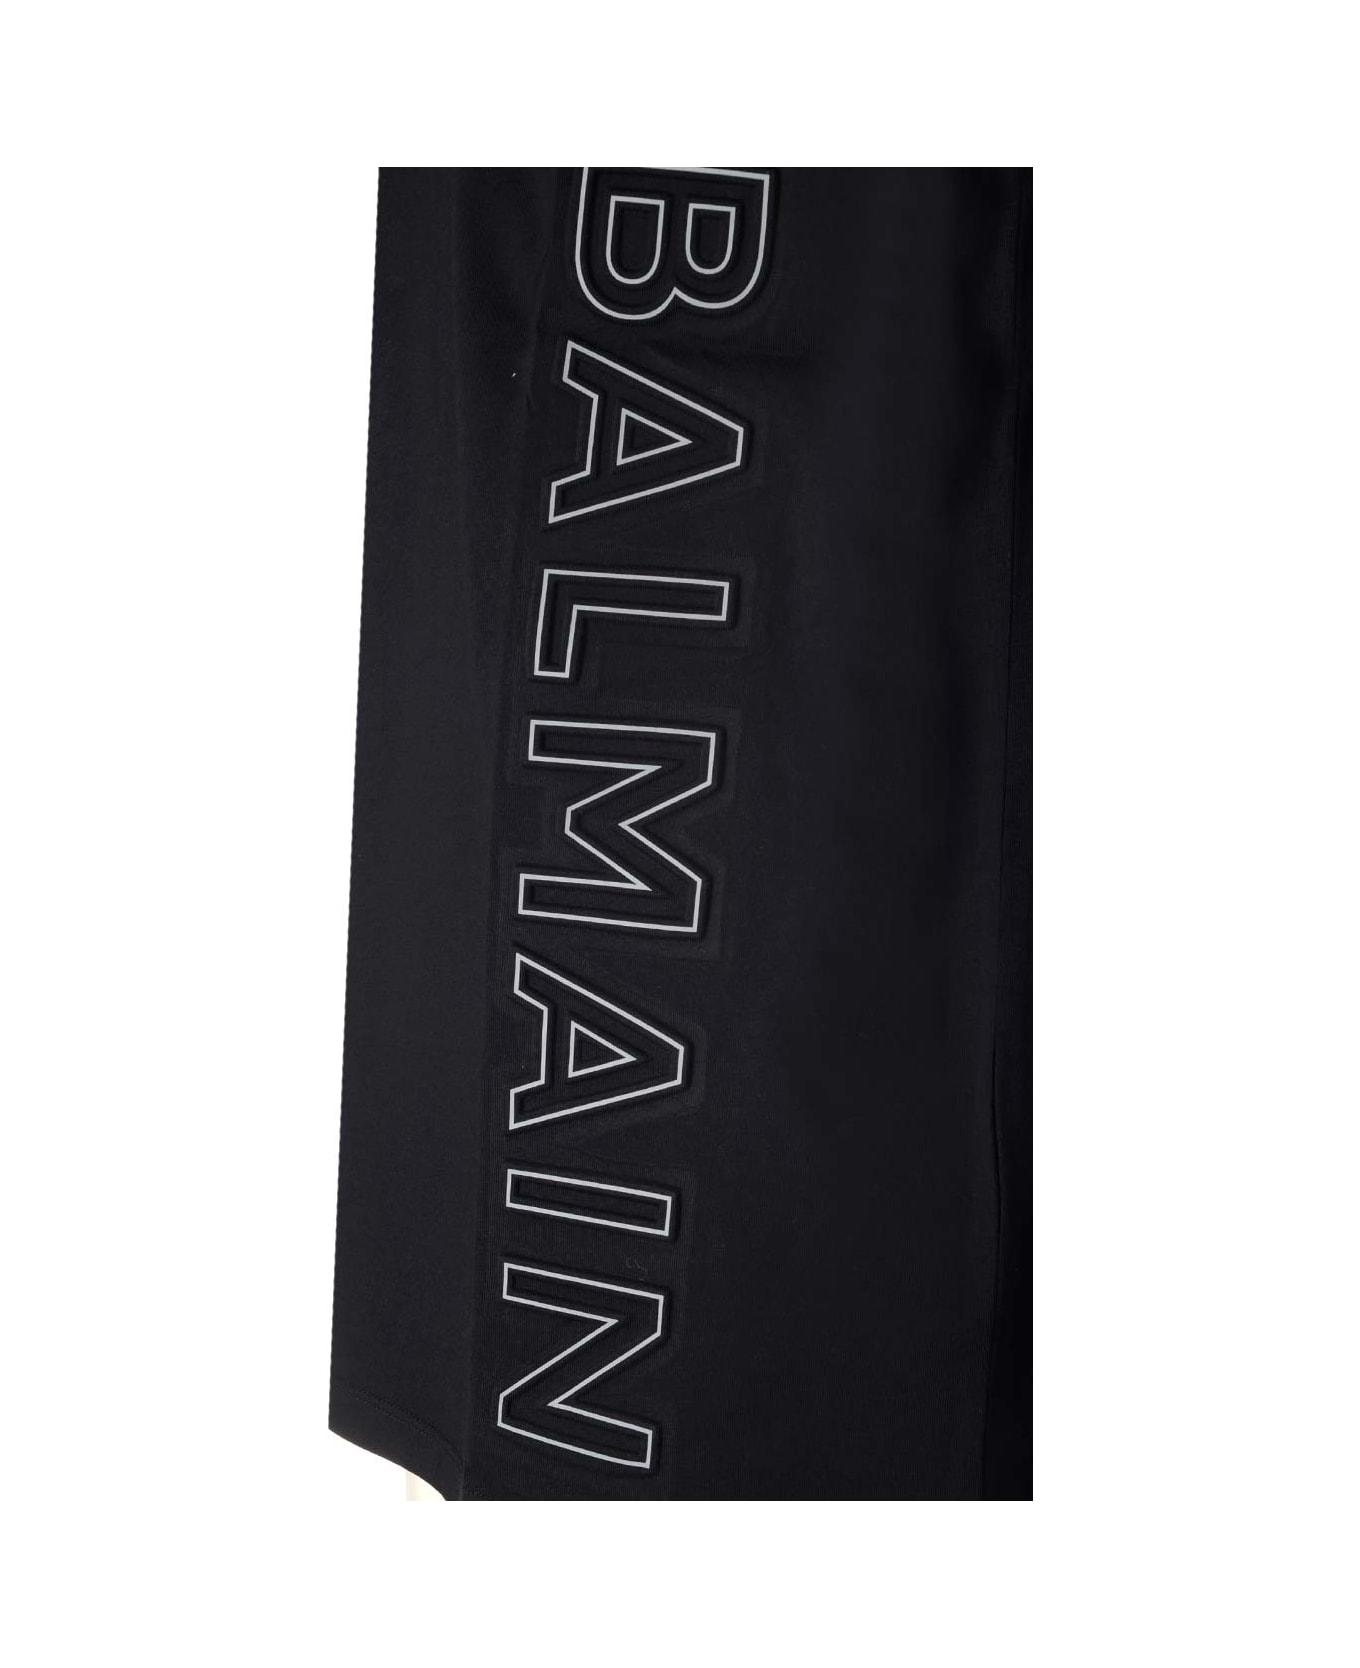 Balmain Black T-shirt With Embossed Logo - Noir/gris シャツ